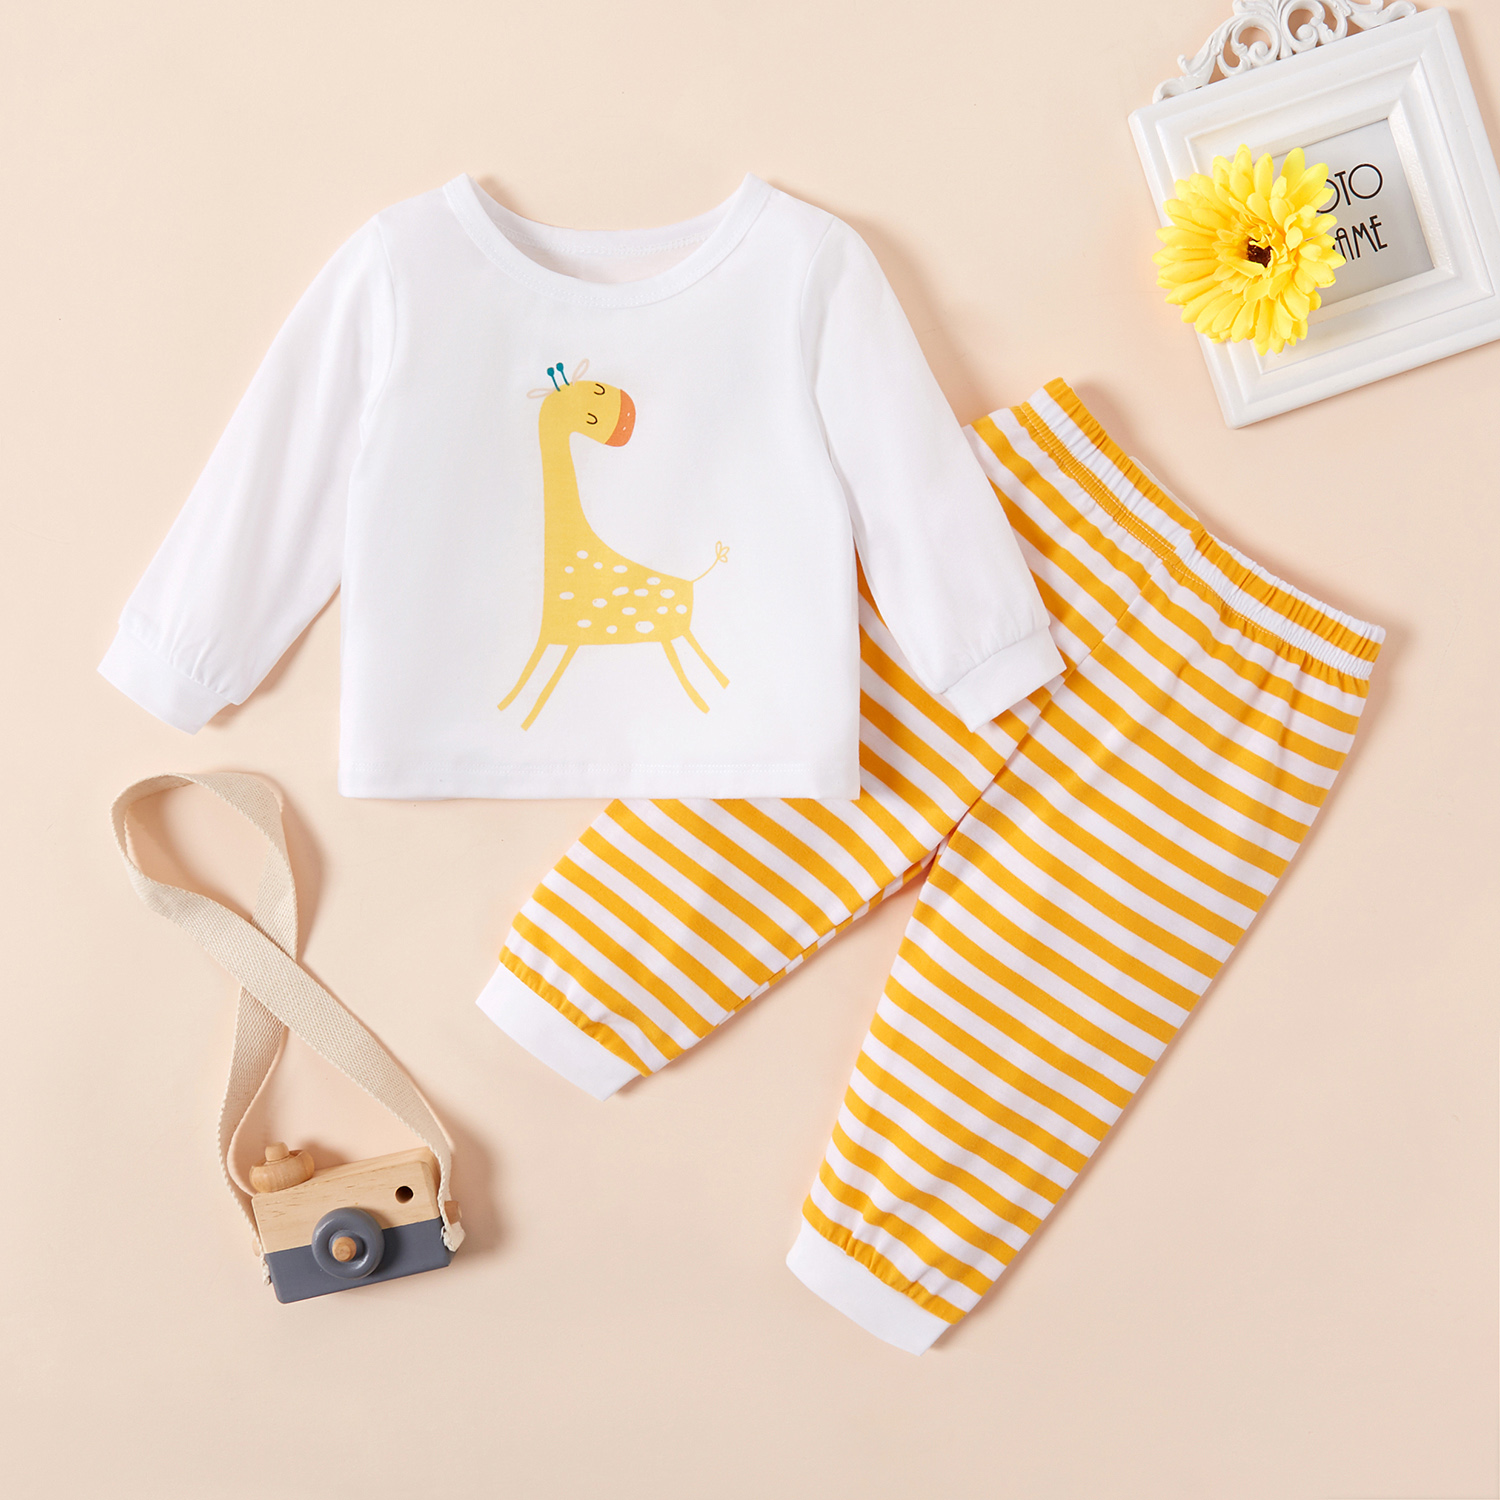 Baby / Toddler Giraffe Print Top and Striped Pants Set